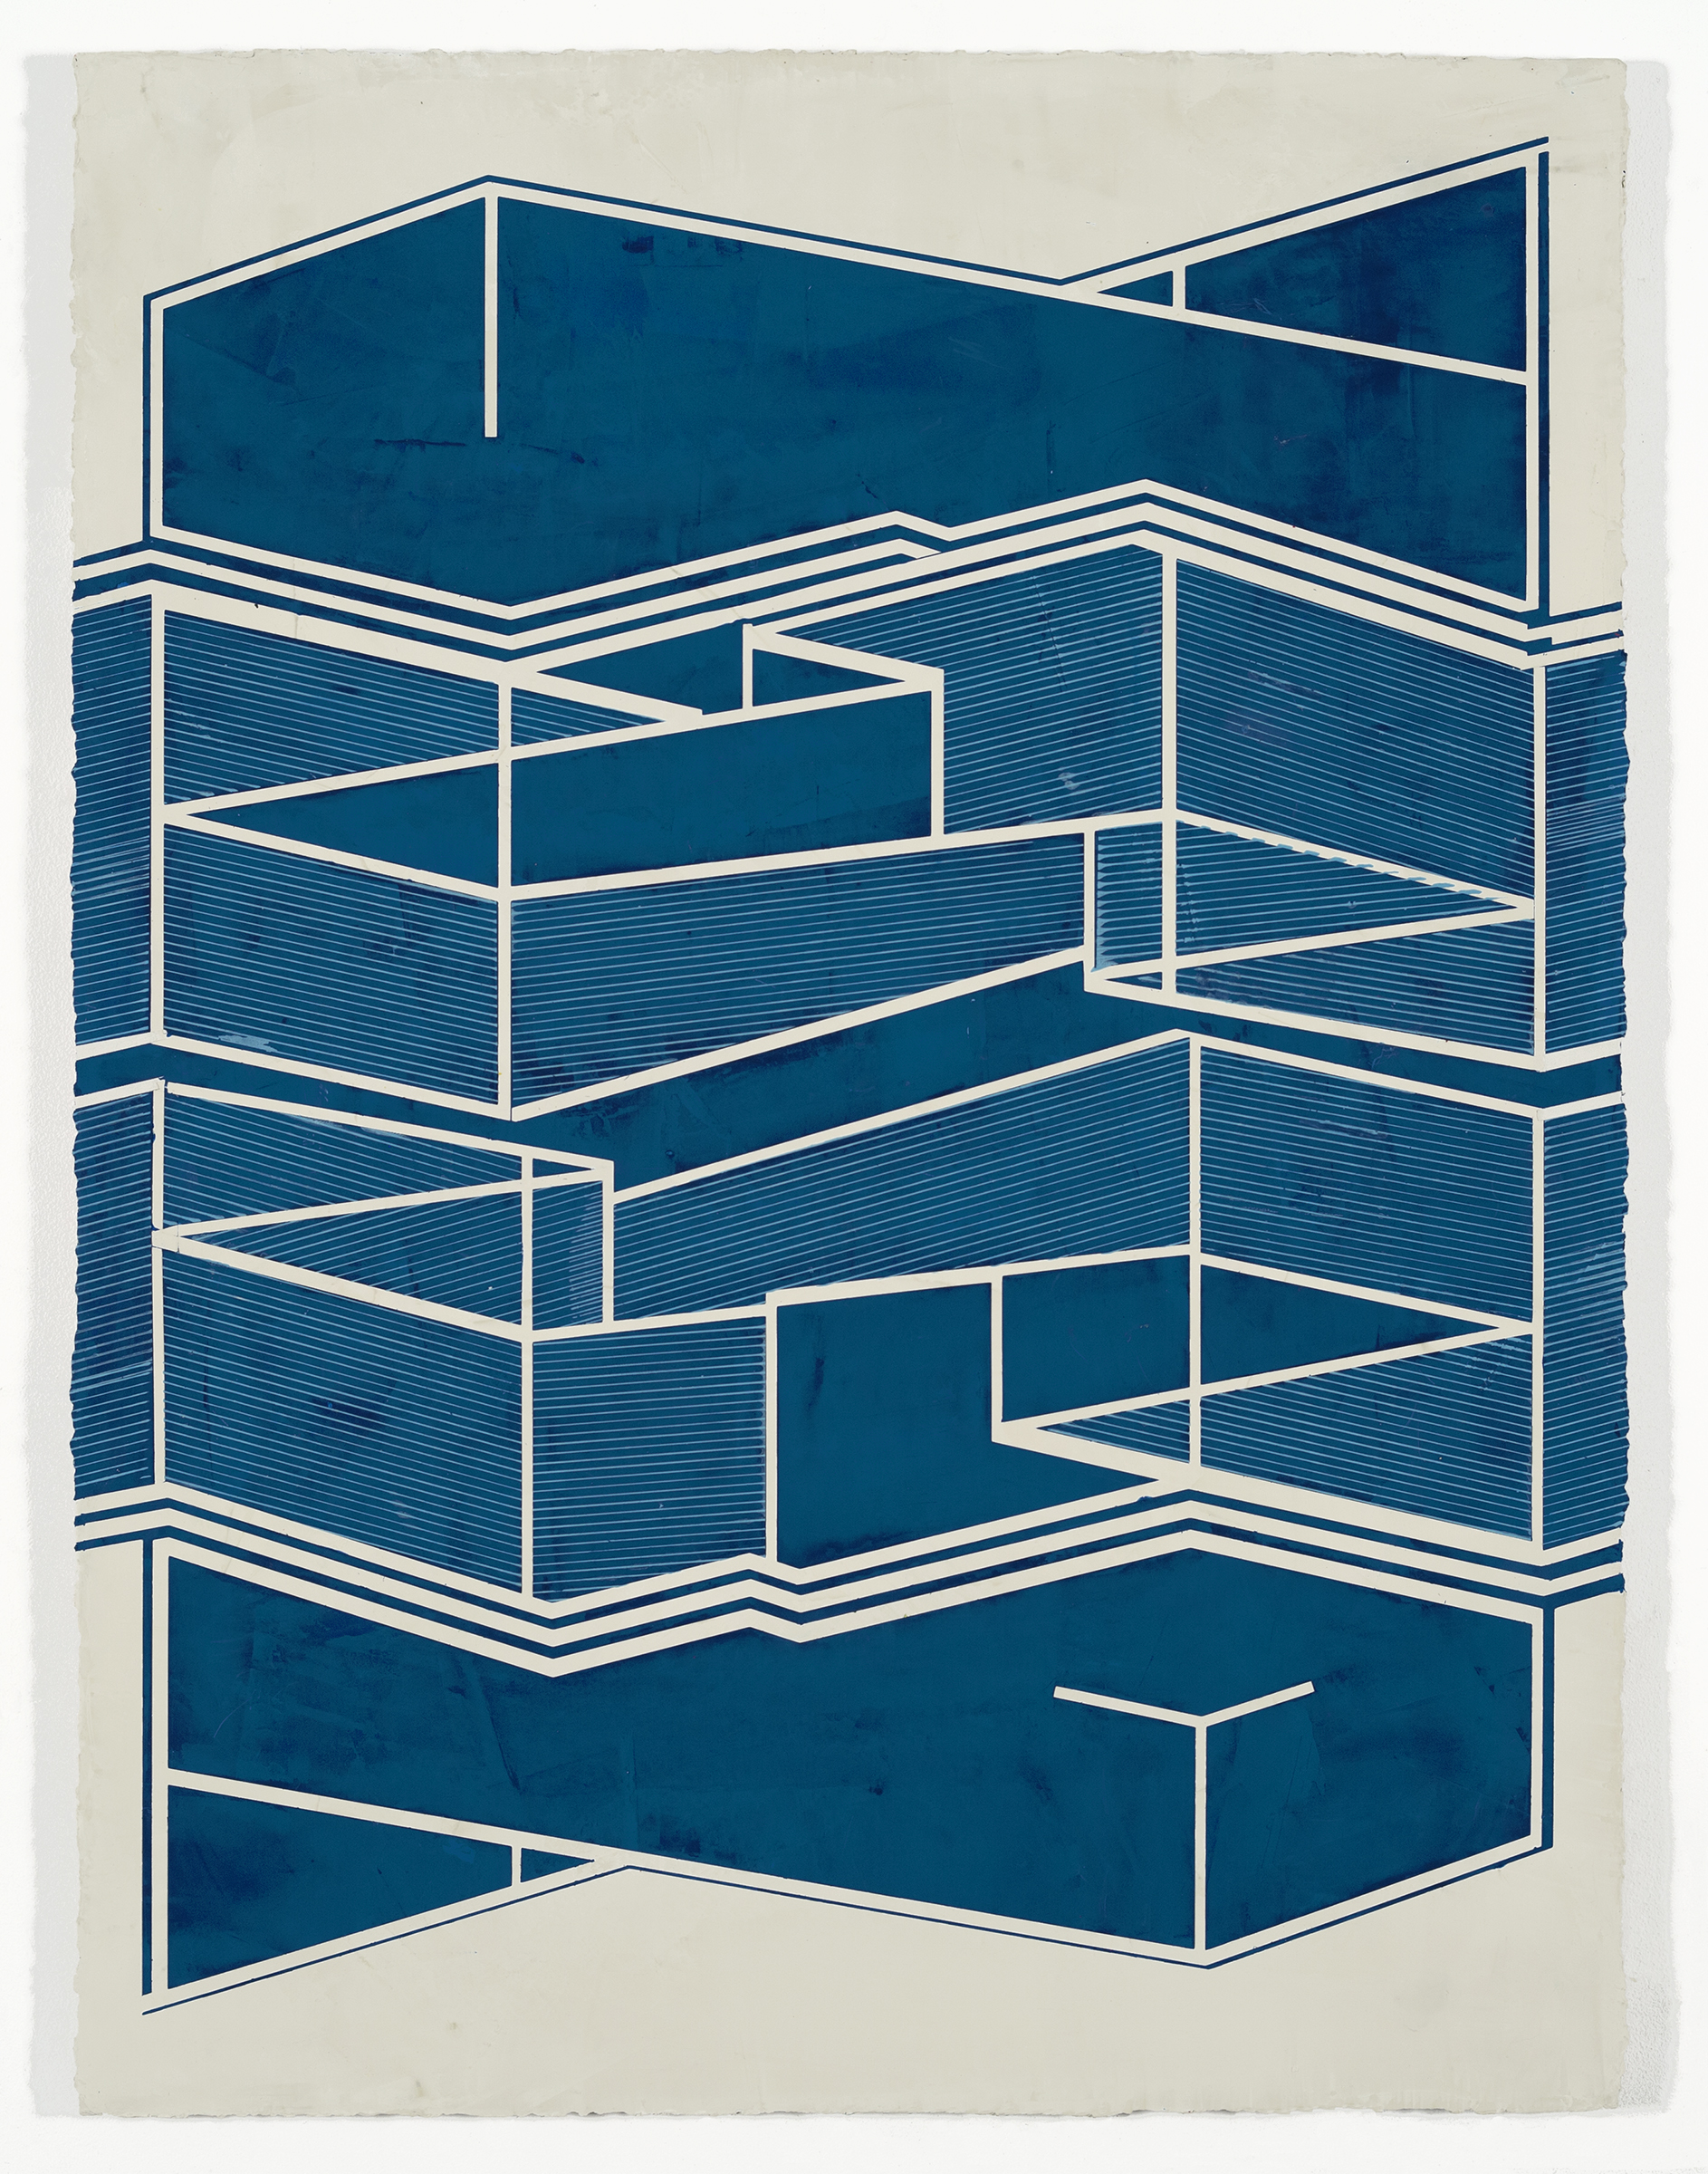   ELISE FERGUSON   Repike , 2016, pigmented plaster on panel, 40" x 30" 